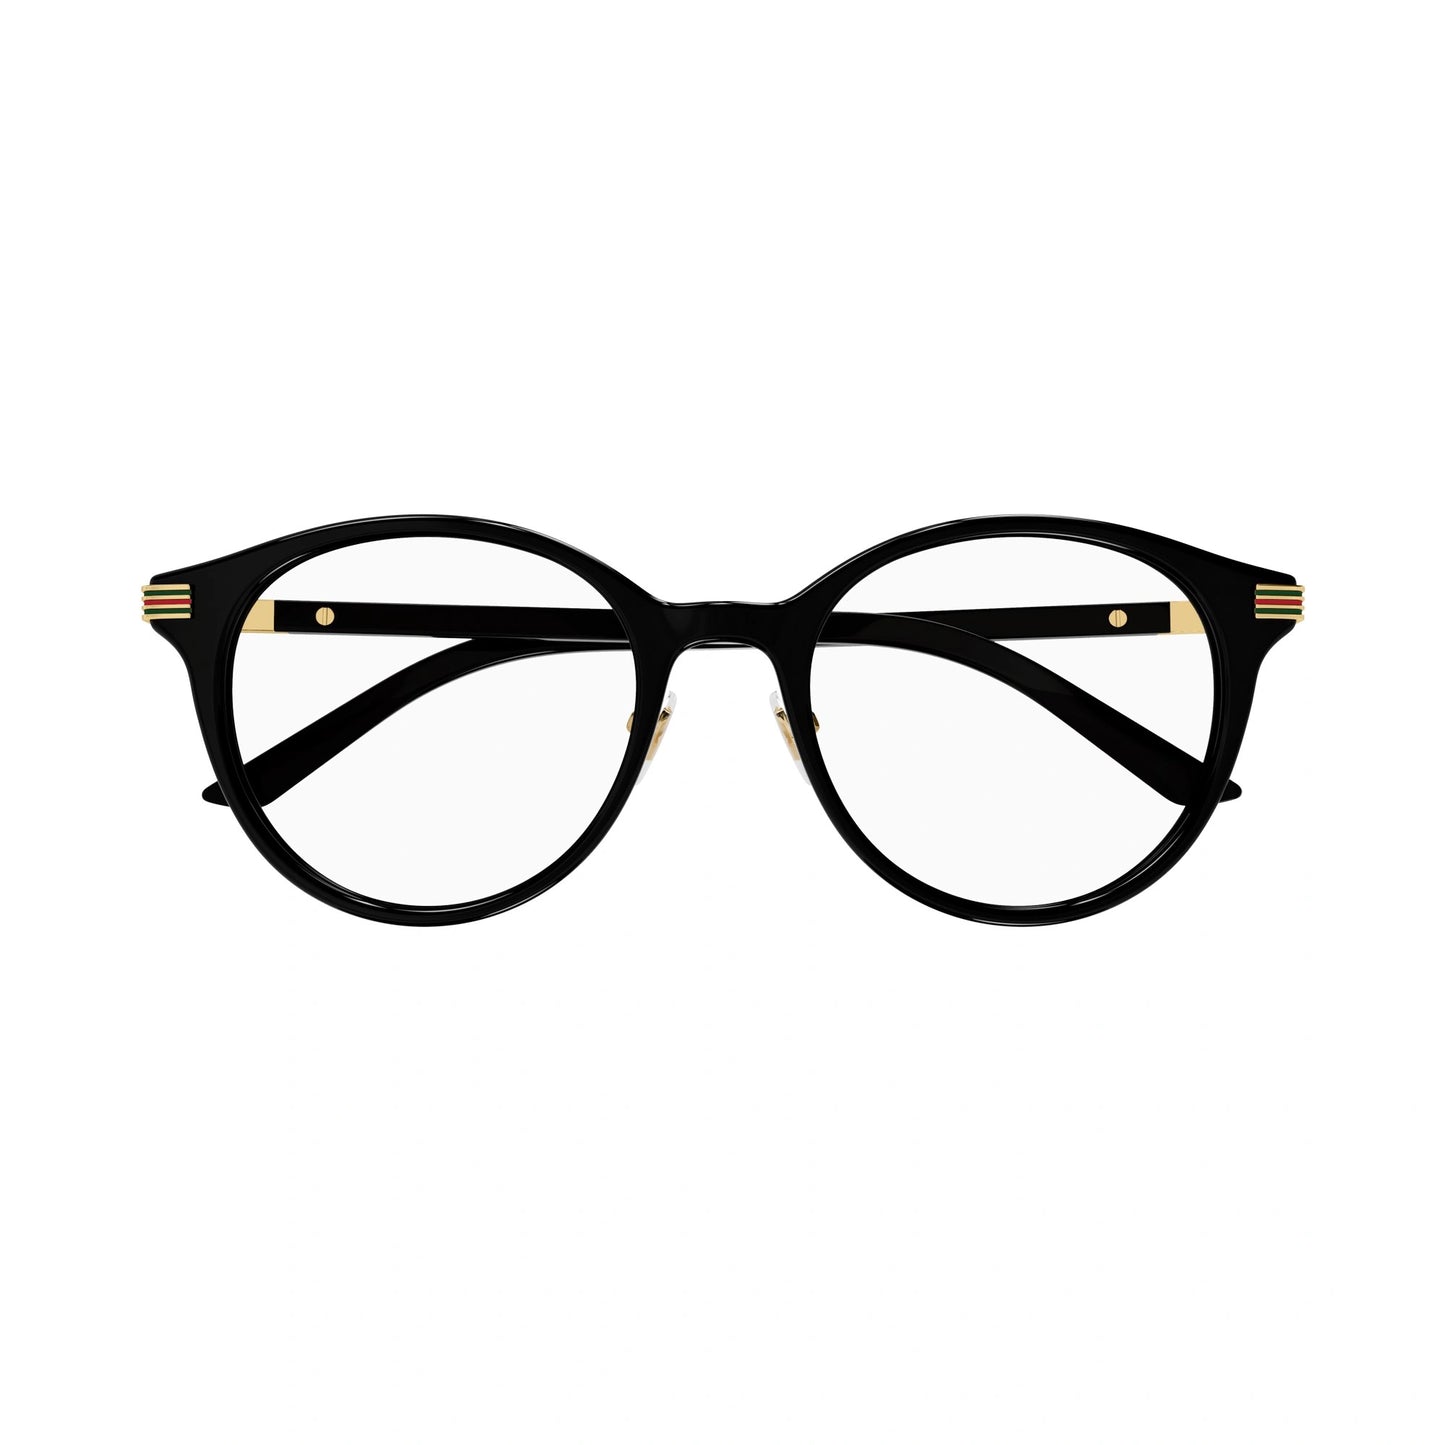 Gucci GG1454oK-001 52mm New Eyeglasses